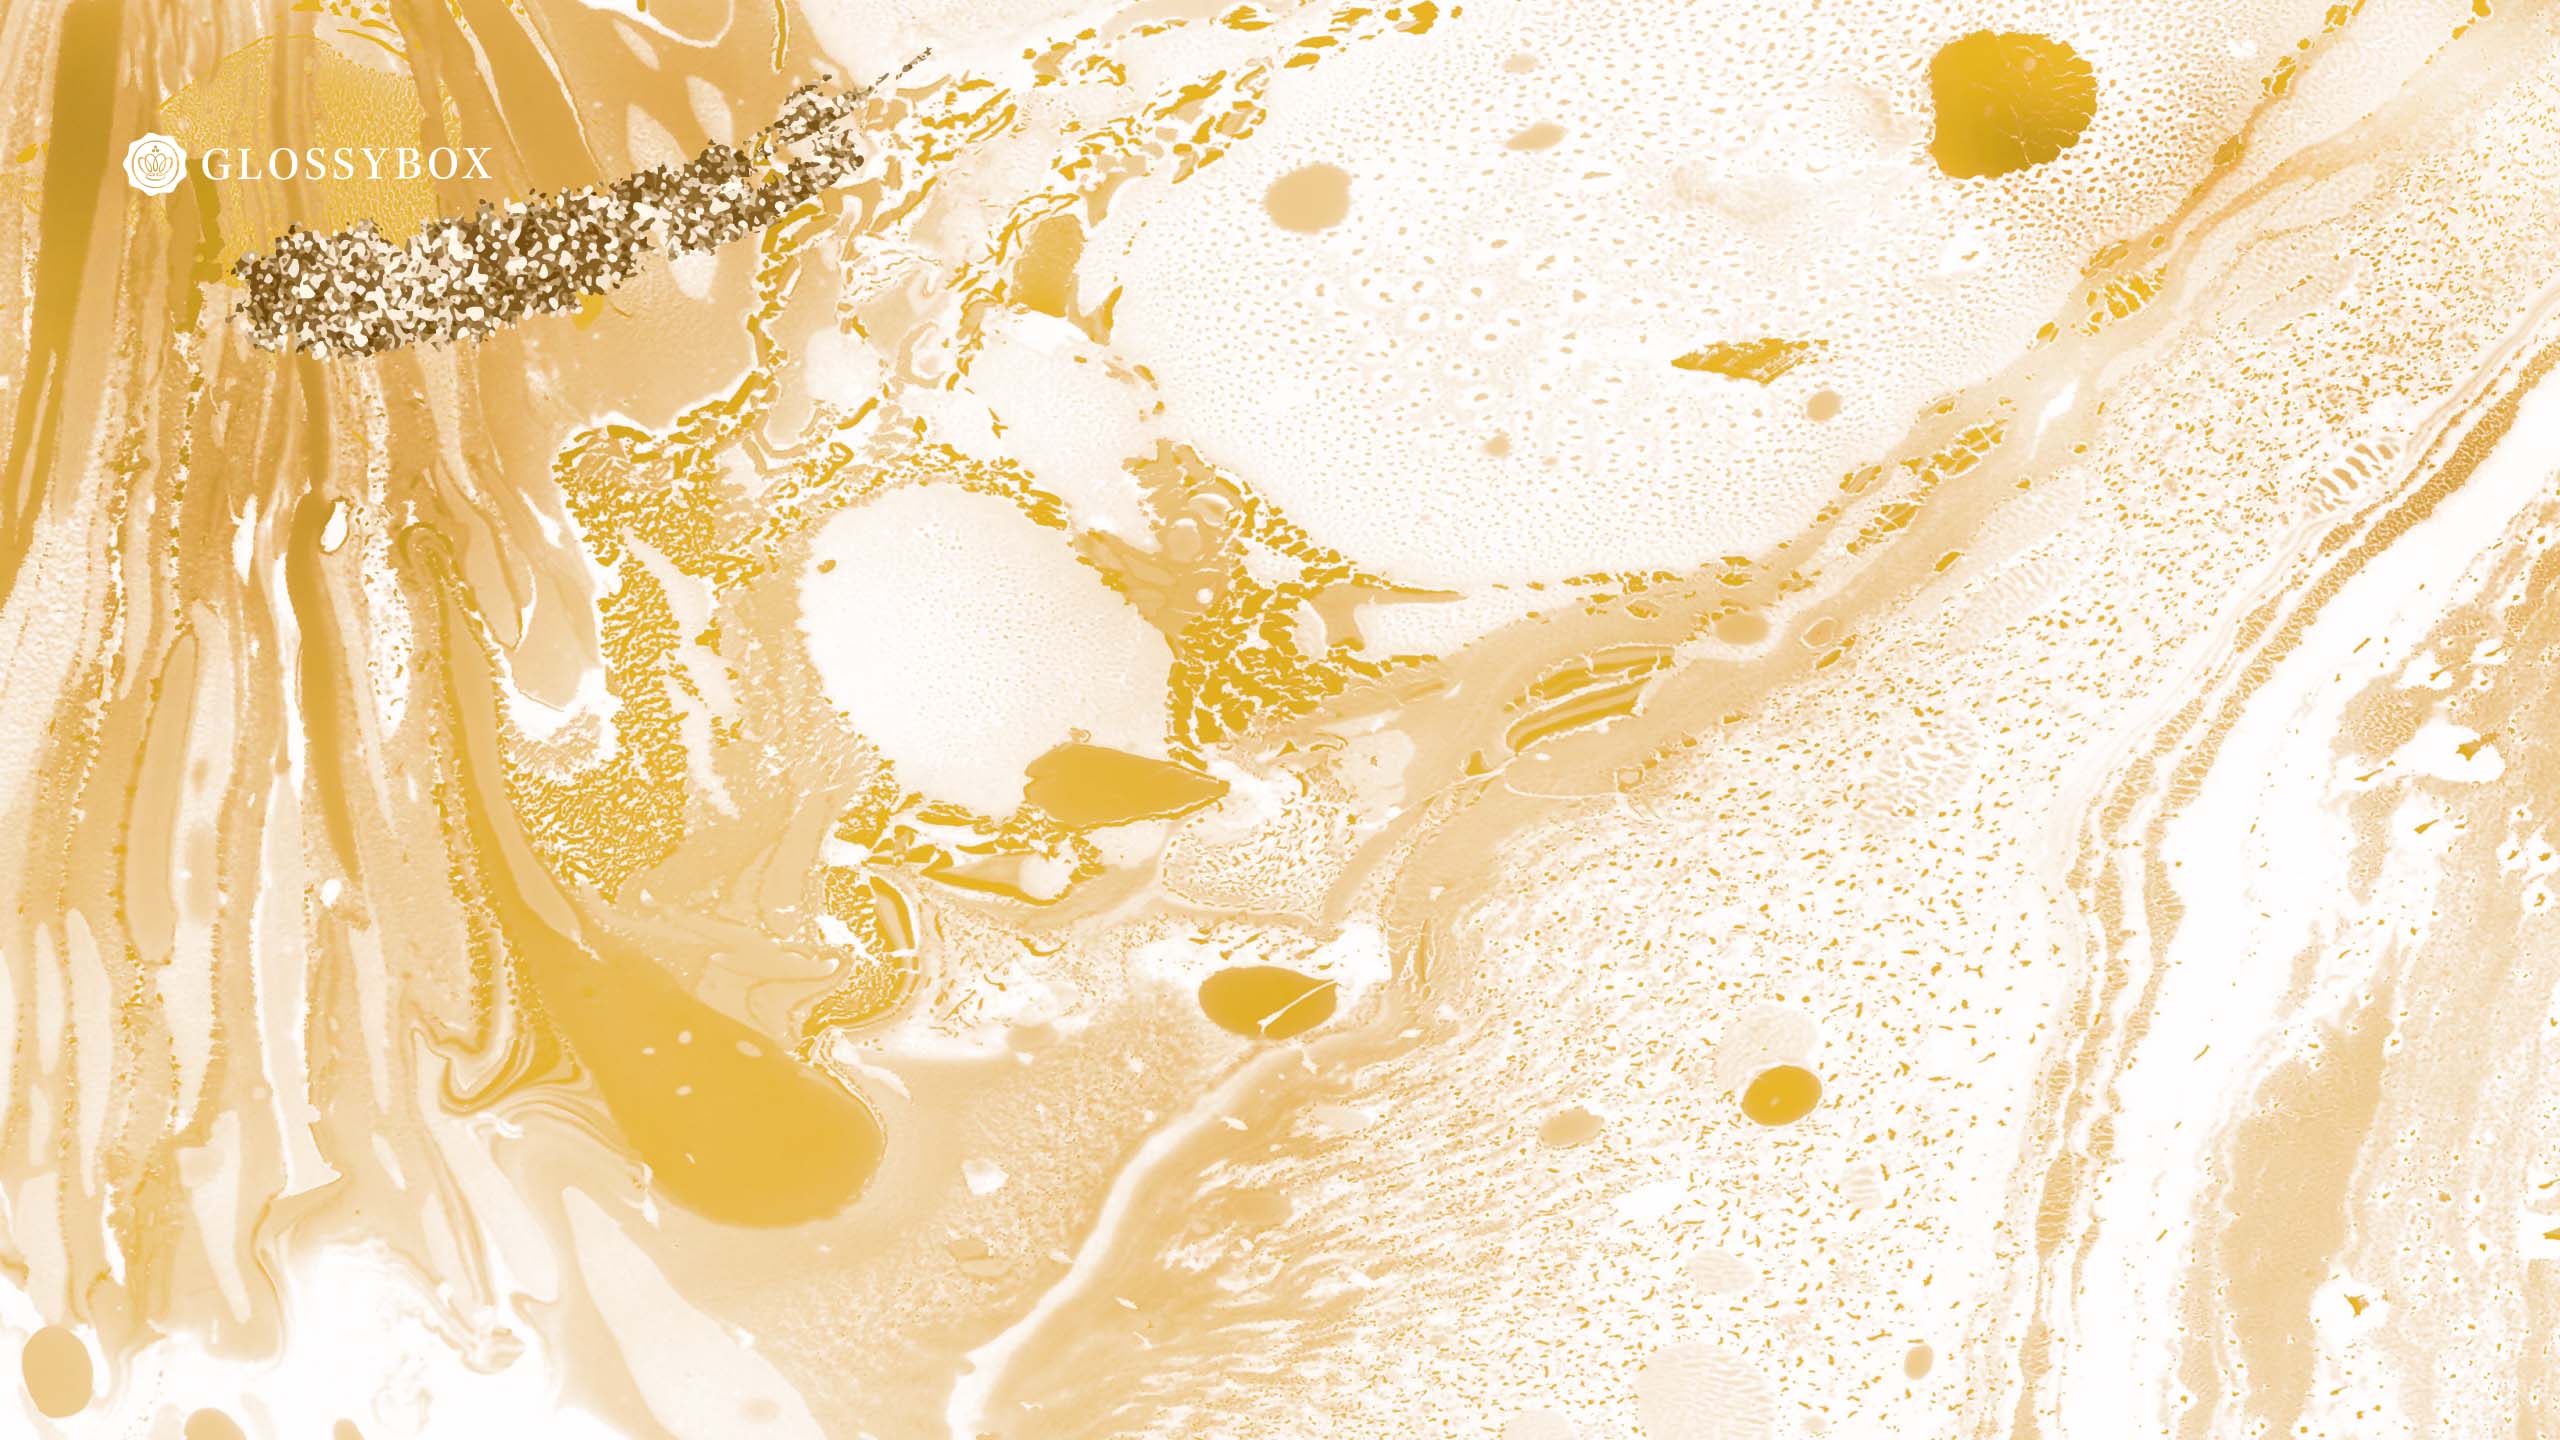 Wallpaper-November-gold-and-champagne-glossybox-design